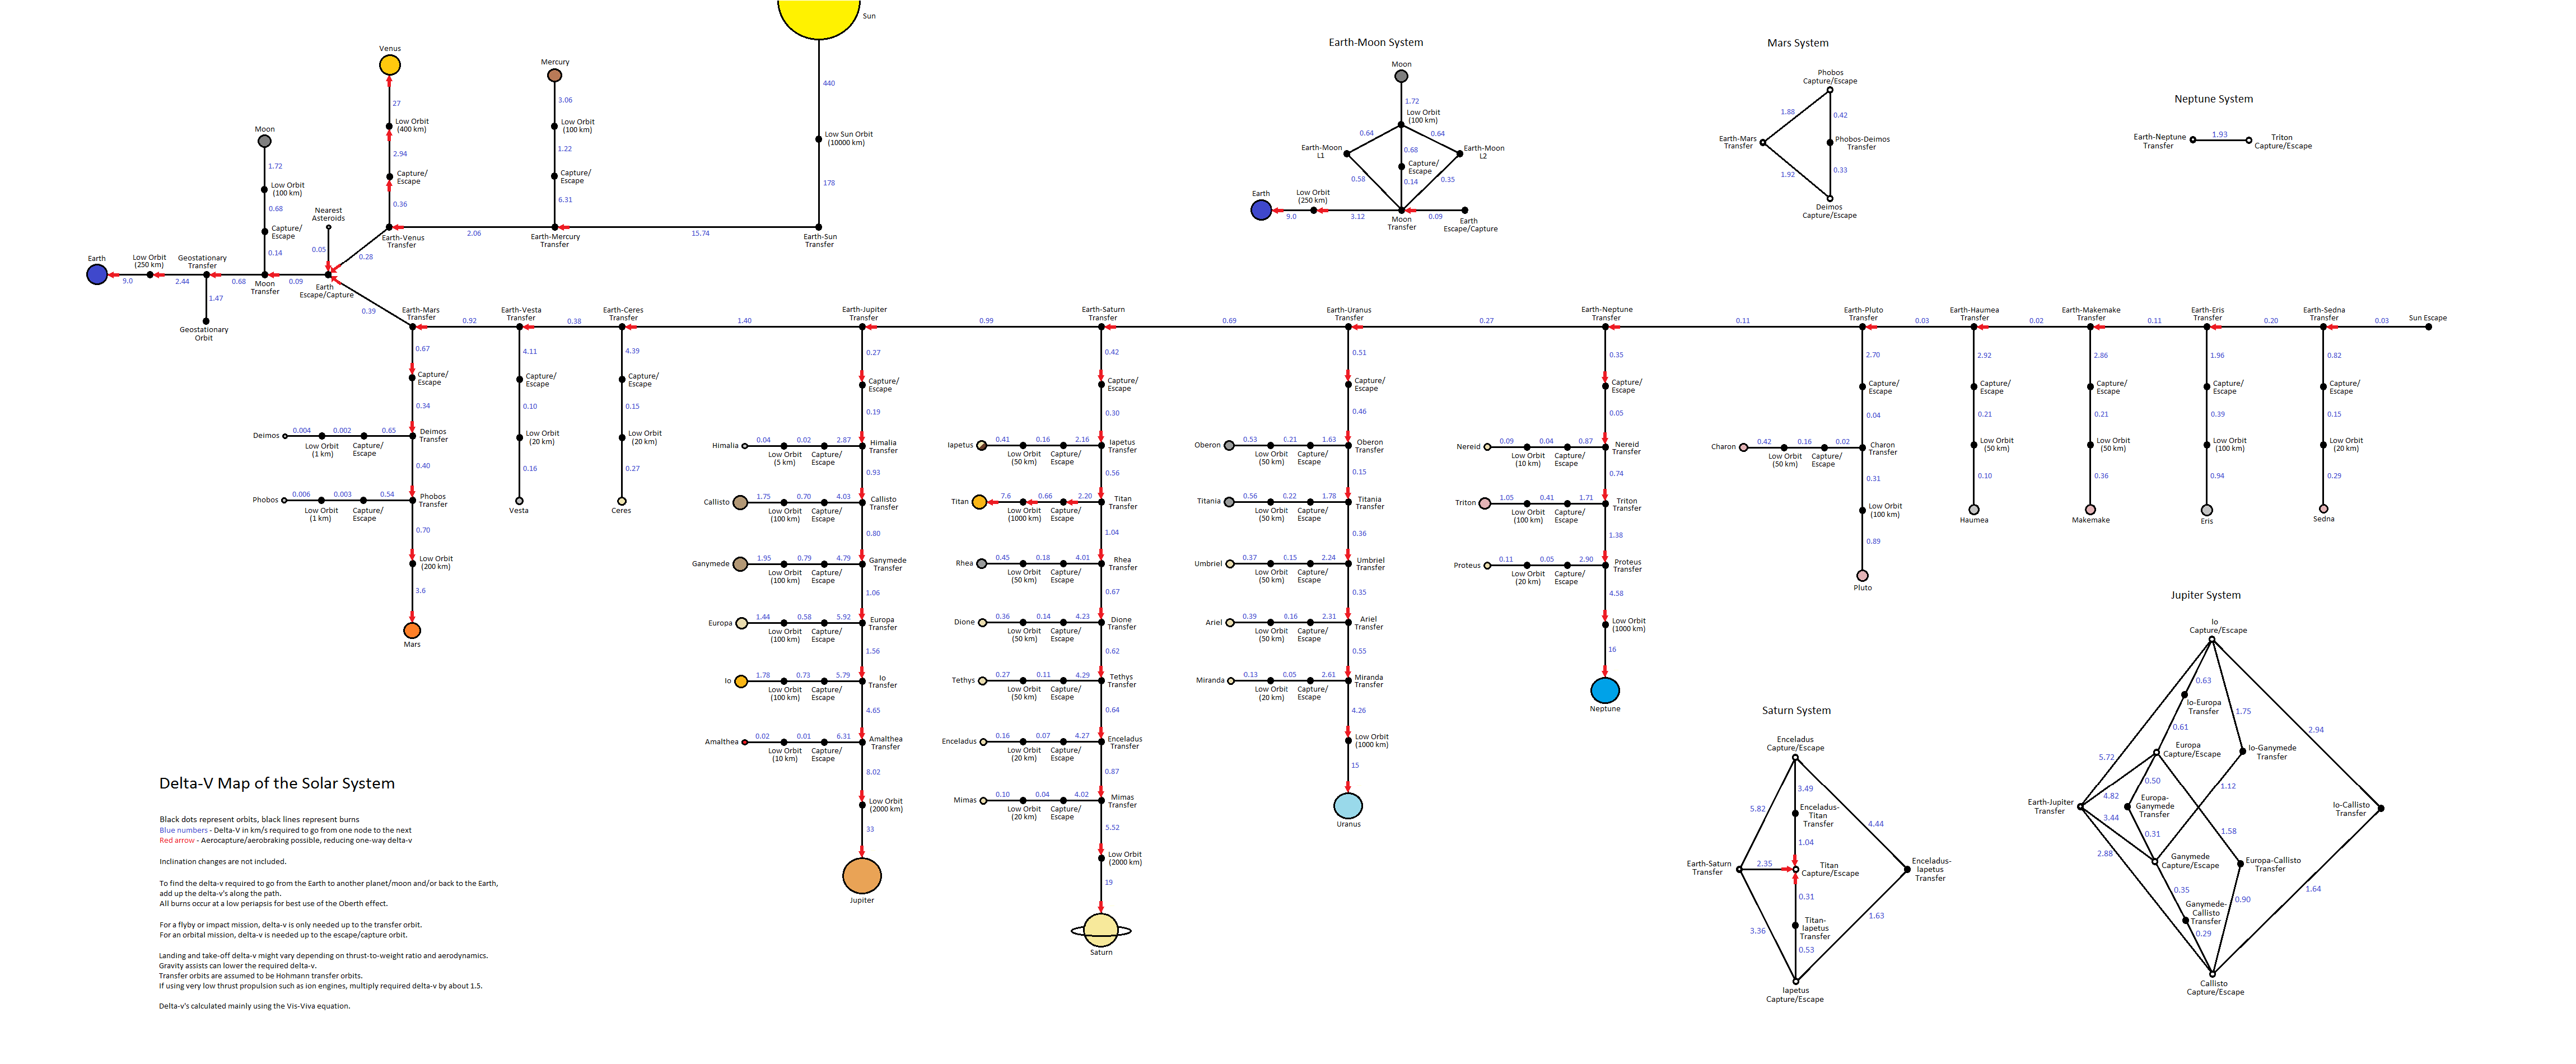 Delta-V chart for Solar System (real).png